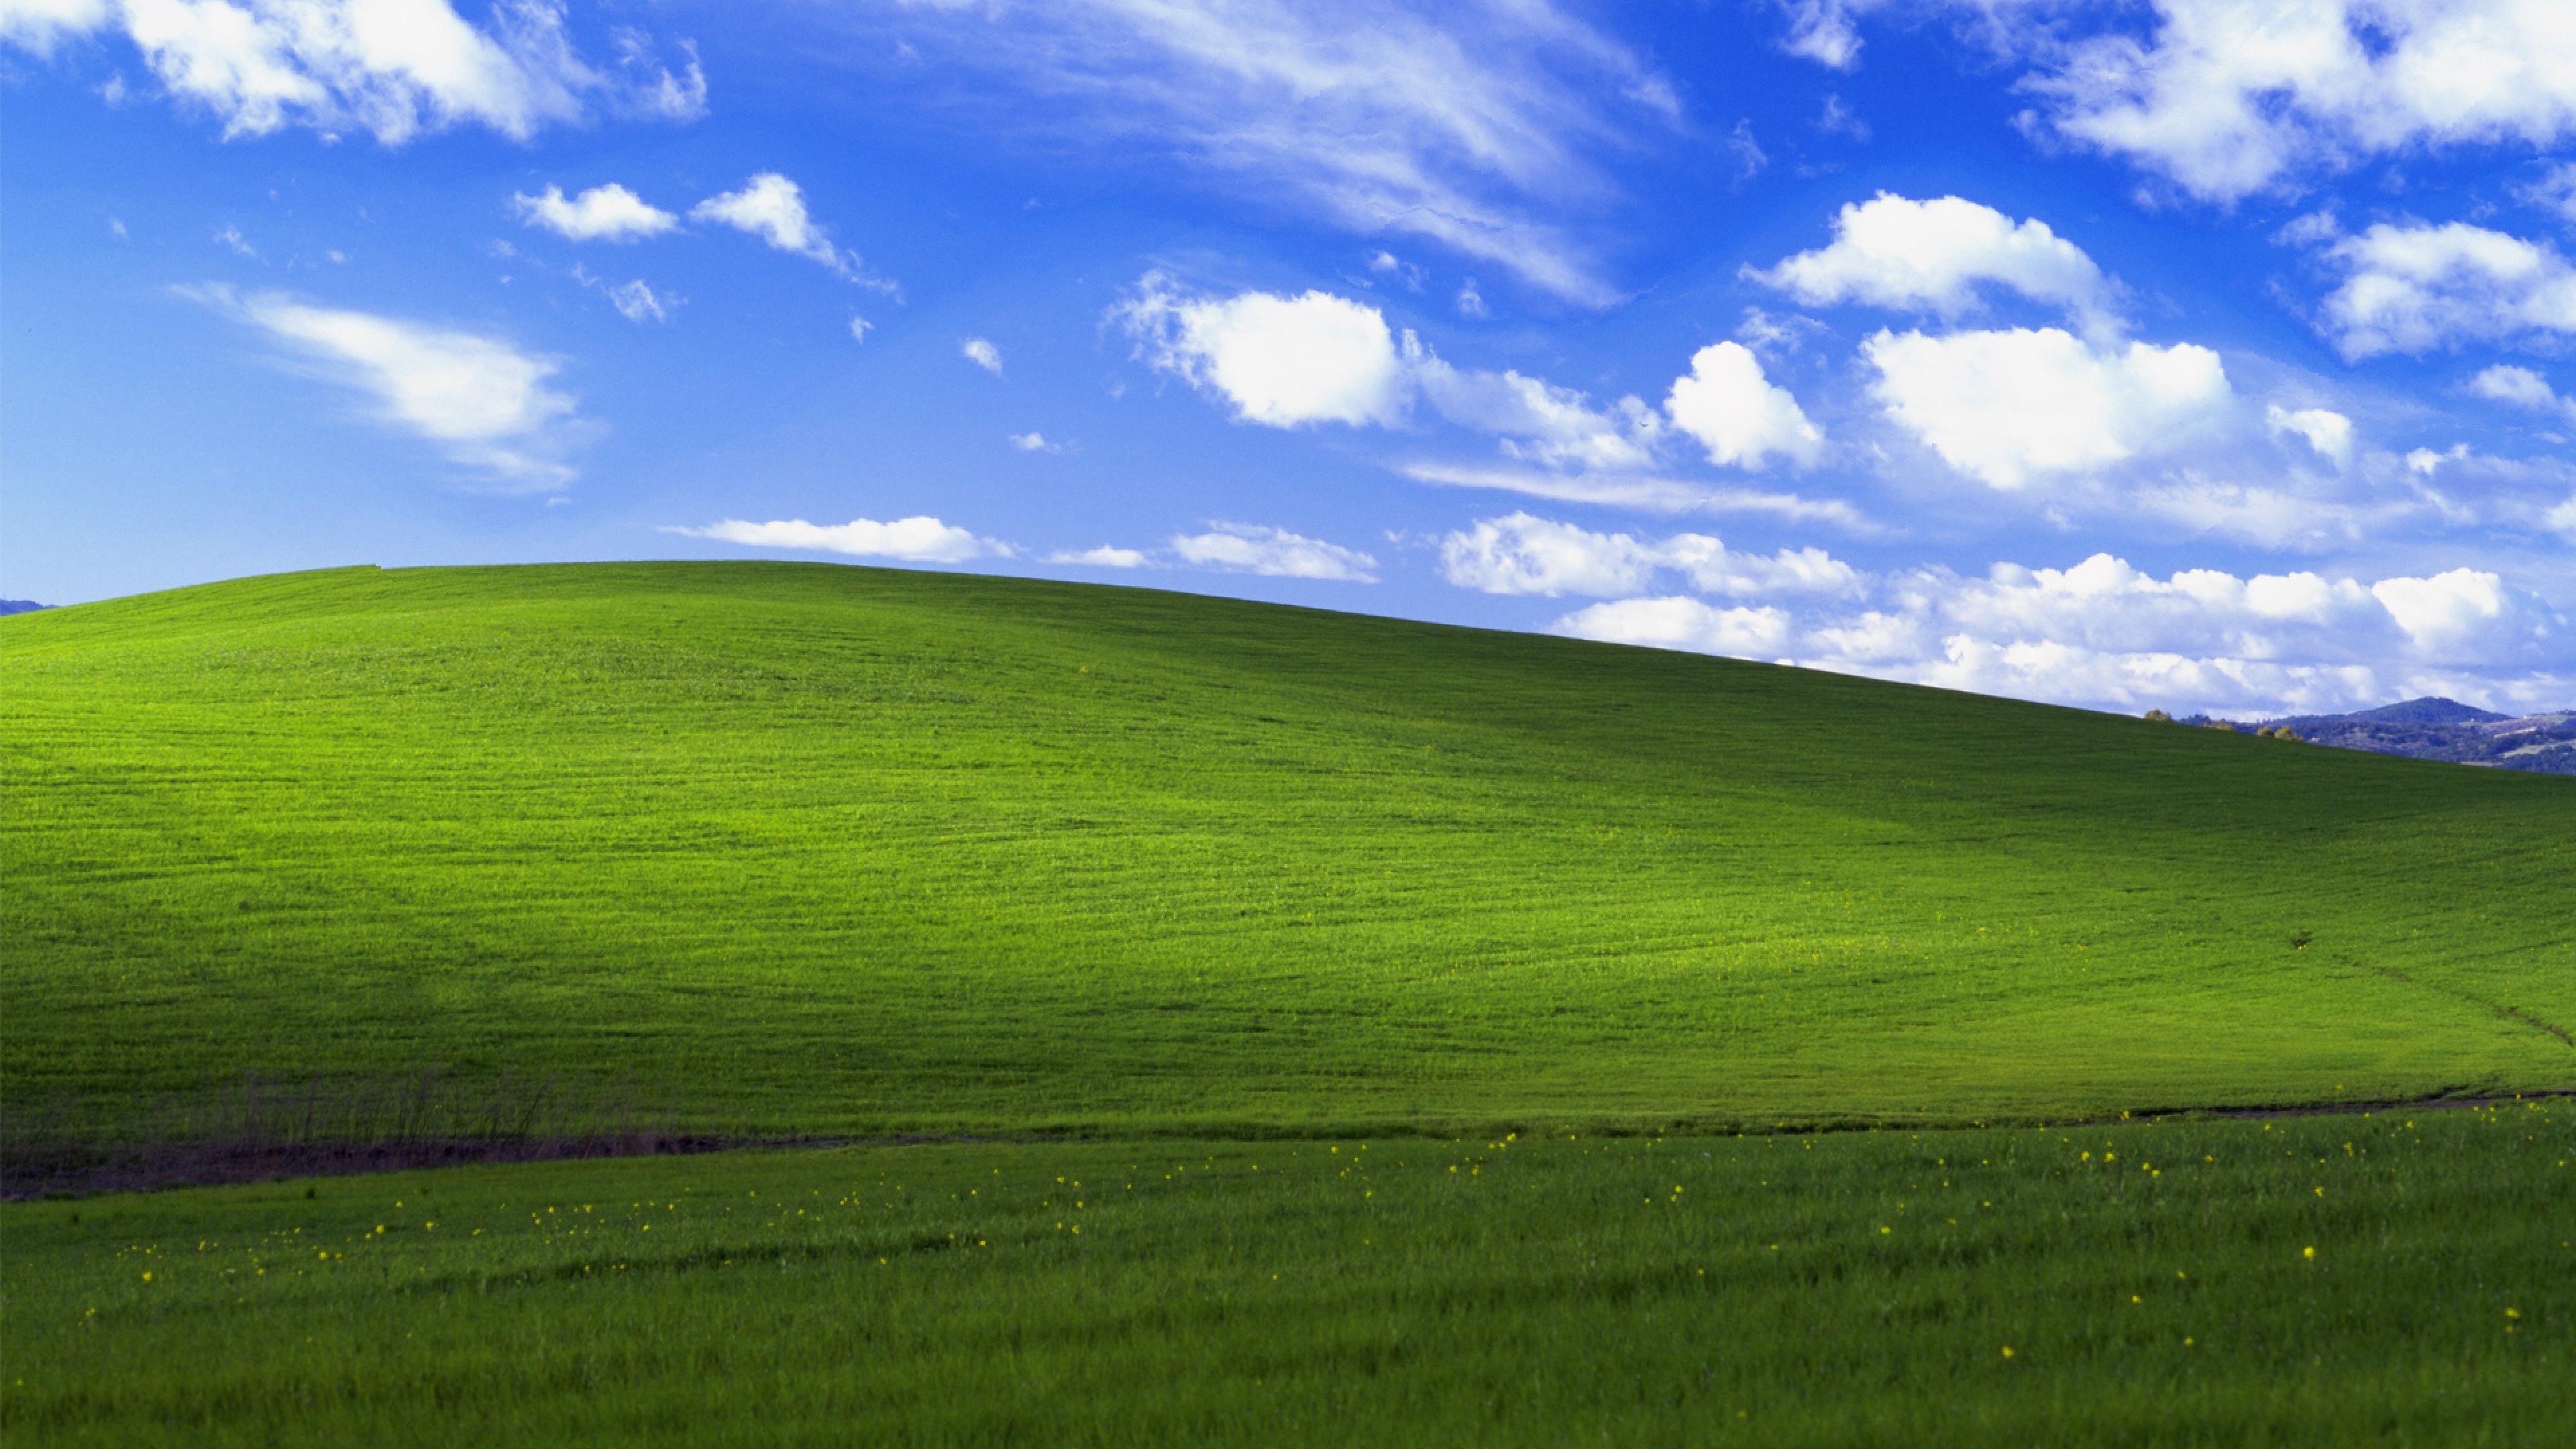 Windows XP Wallpaper Amazings 2930 - HD Wallpapers Site